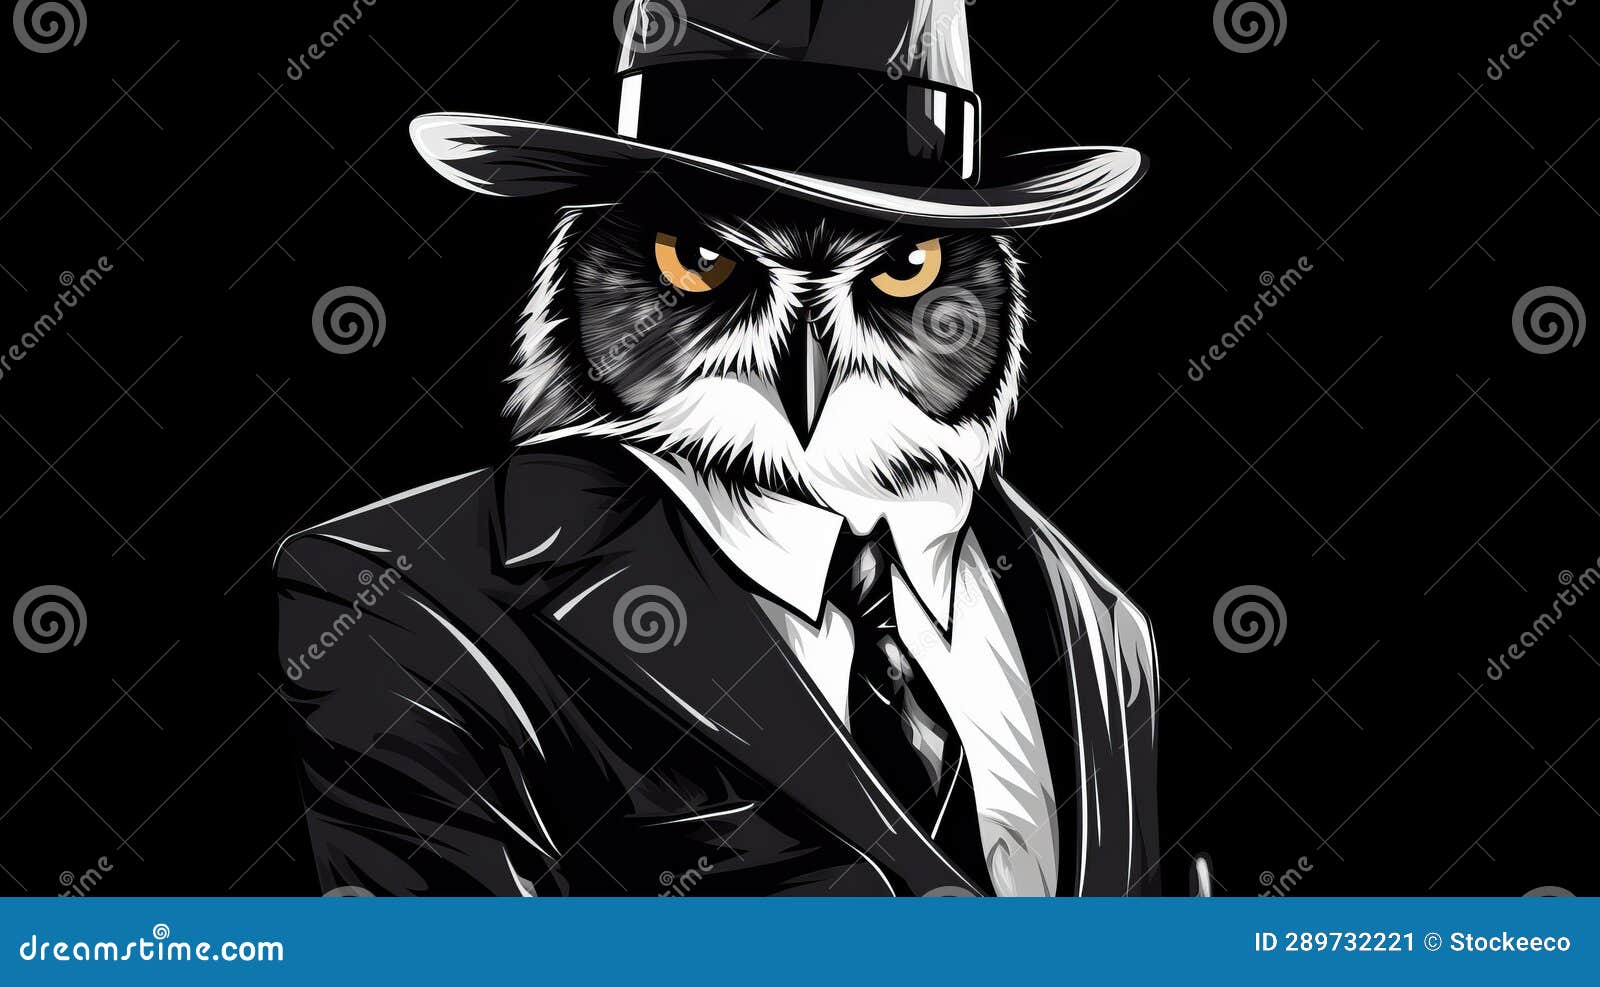 streetwise owl detective: graphic novel inspired pop art 